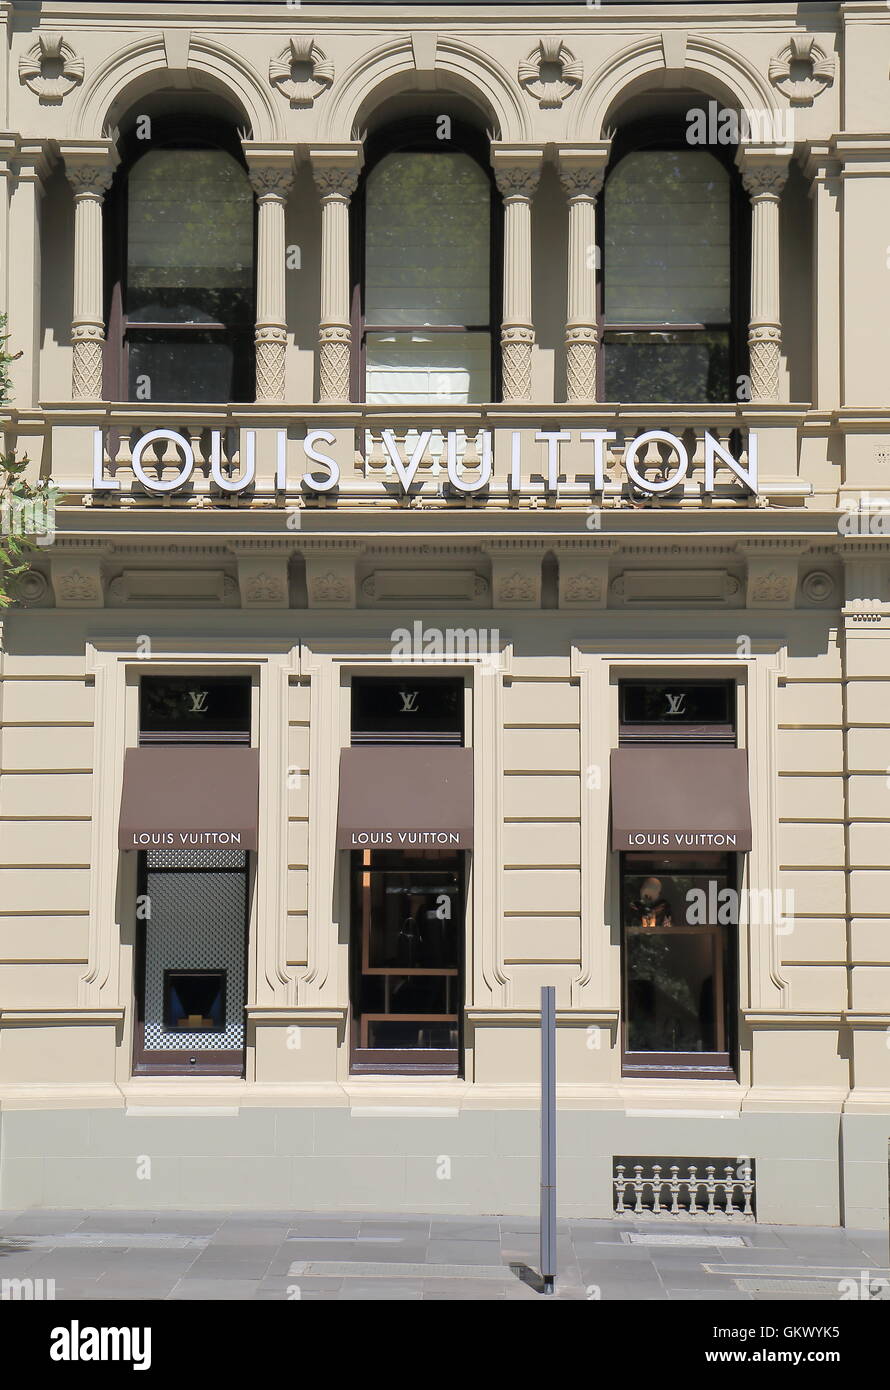 Louis Vutton shop in Melbourne Australia, French fashion house